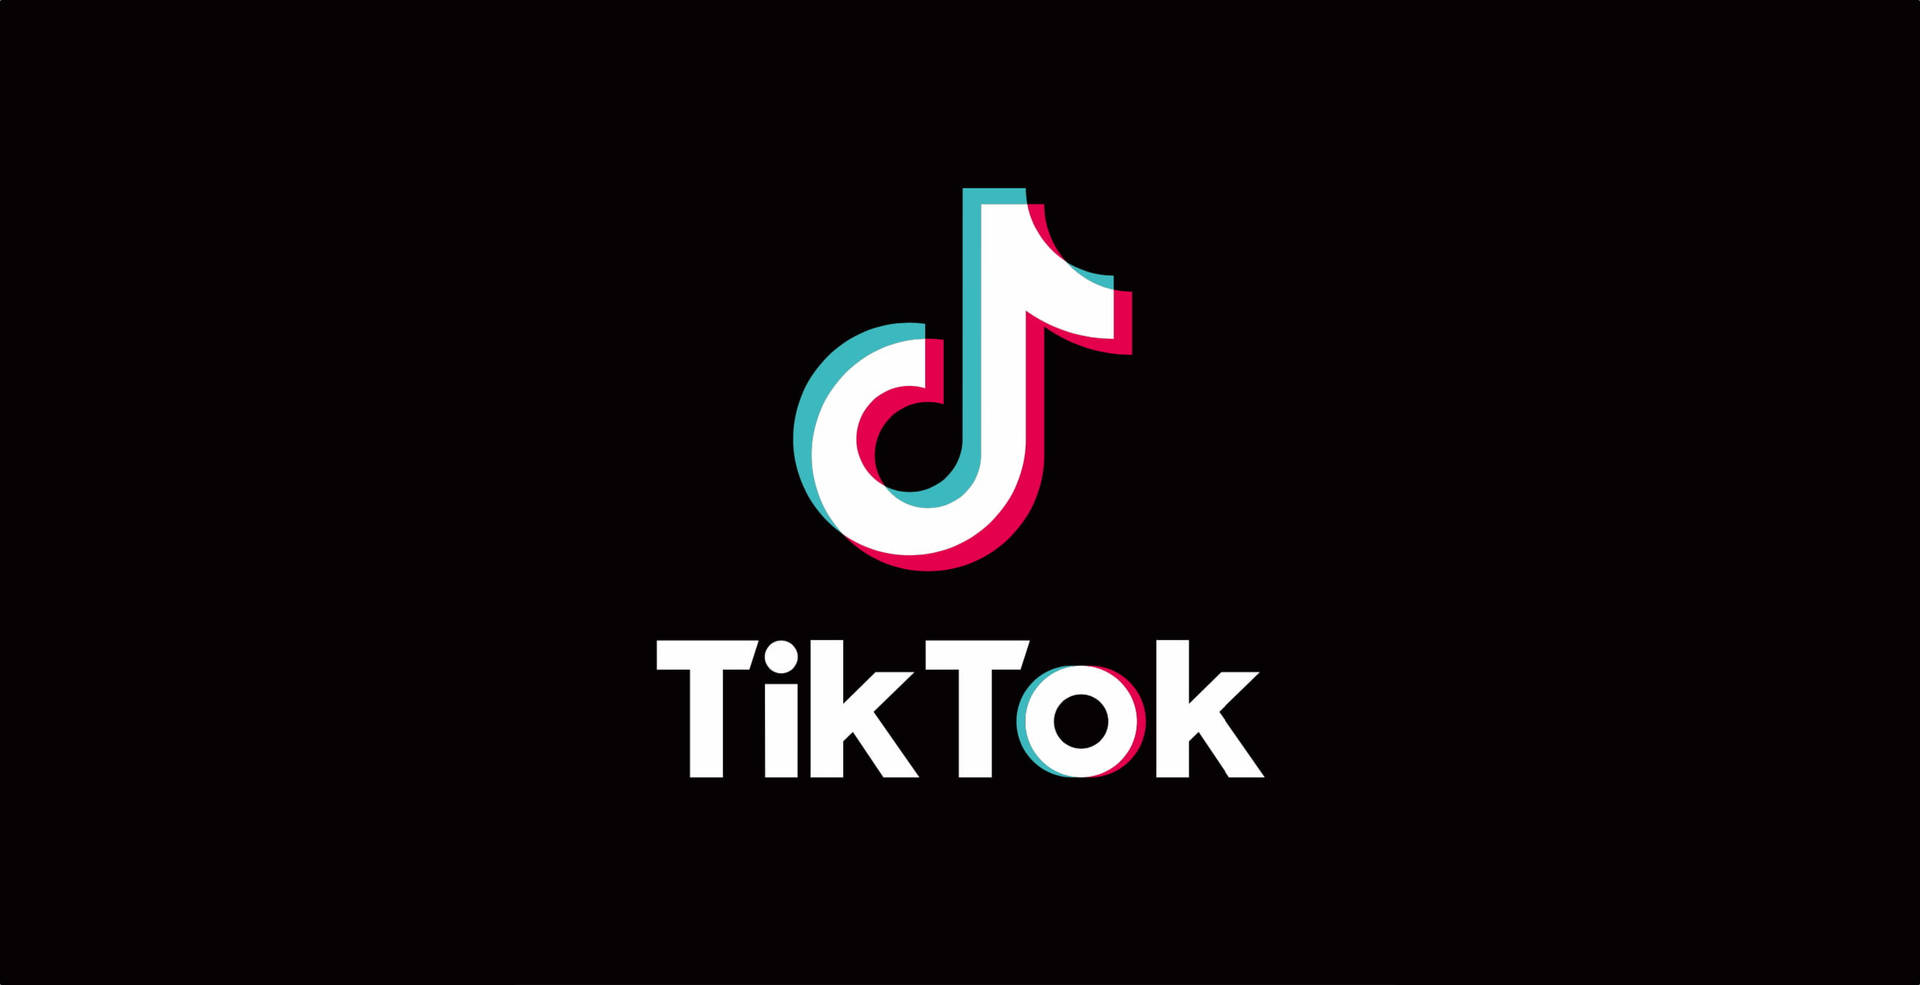 Free Tiktok Wallpaper Downloads, [200+] Tiktok Wallpapers for FREE |  